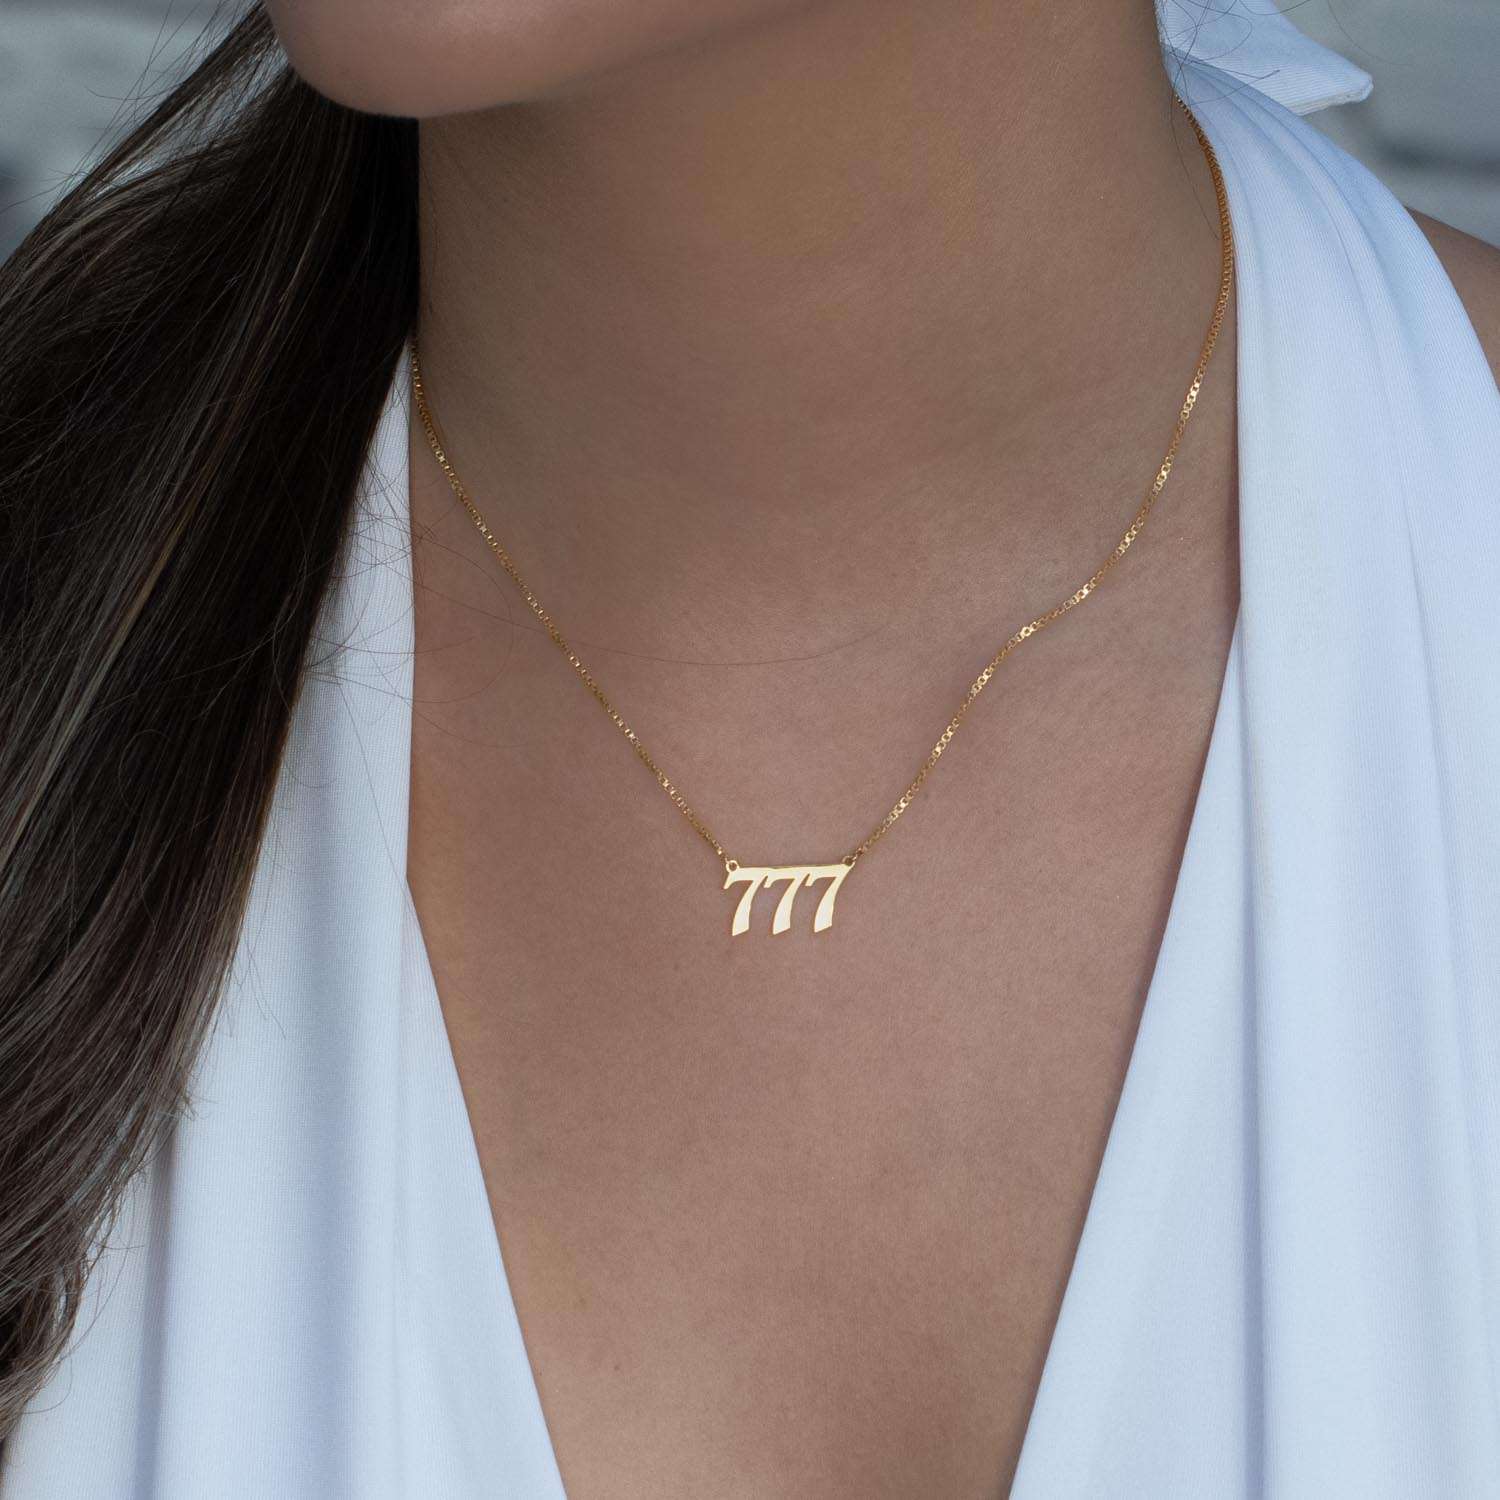 14kt gold and diamond 222 necklace | Luna Skye